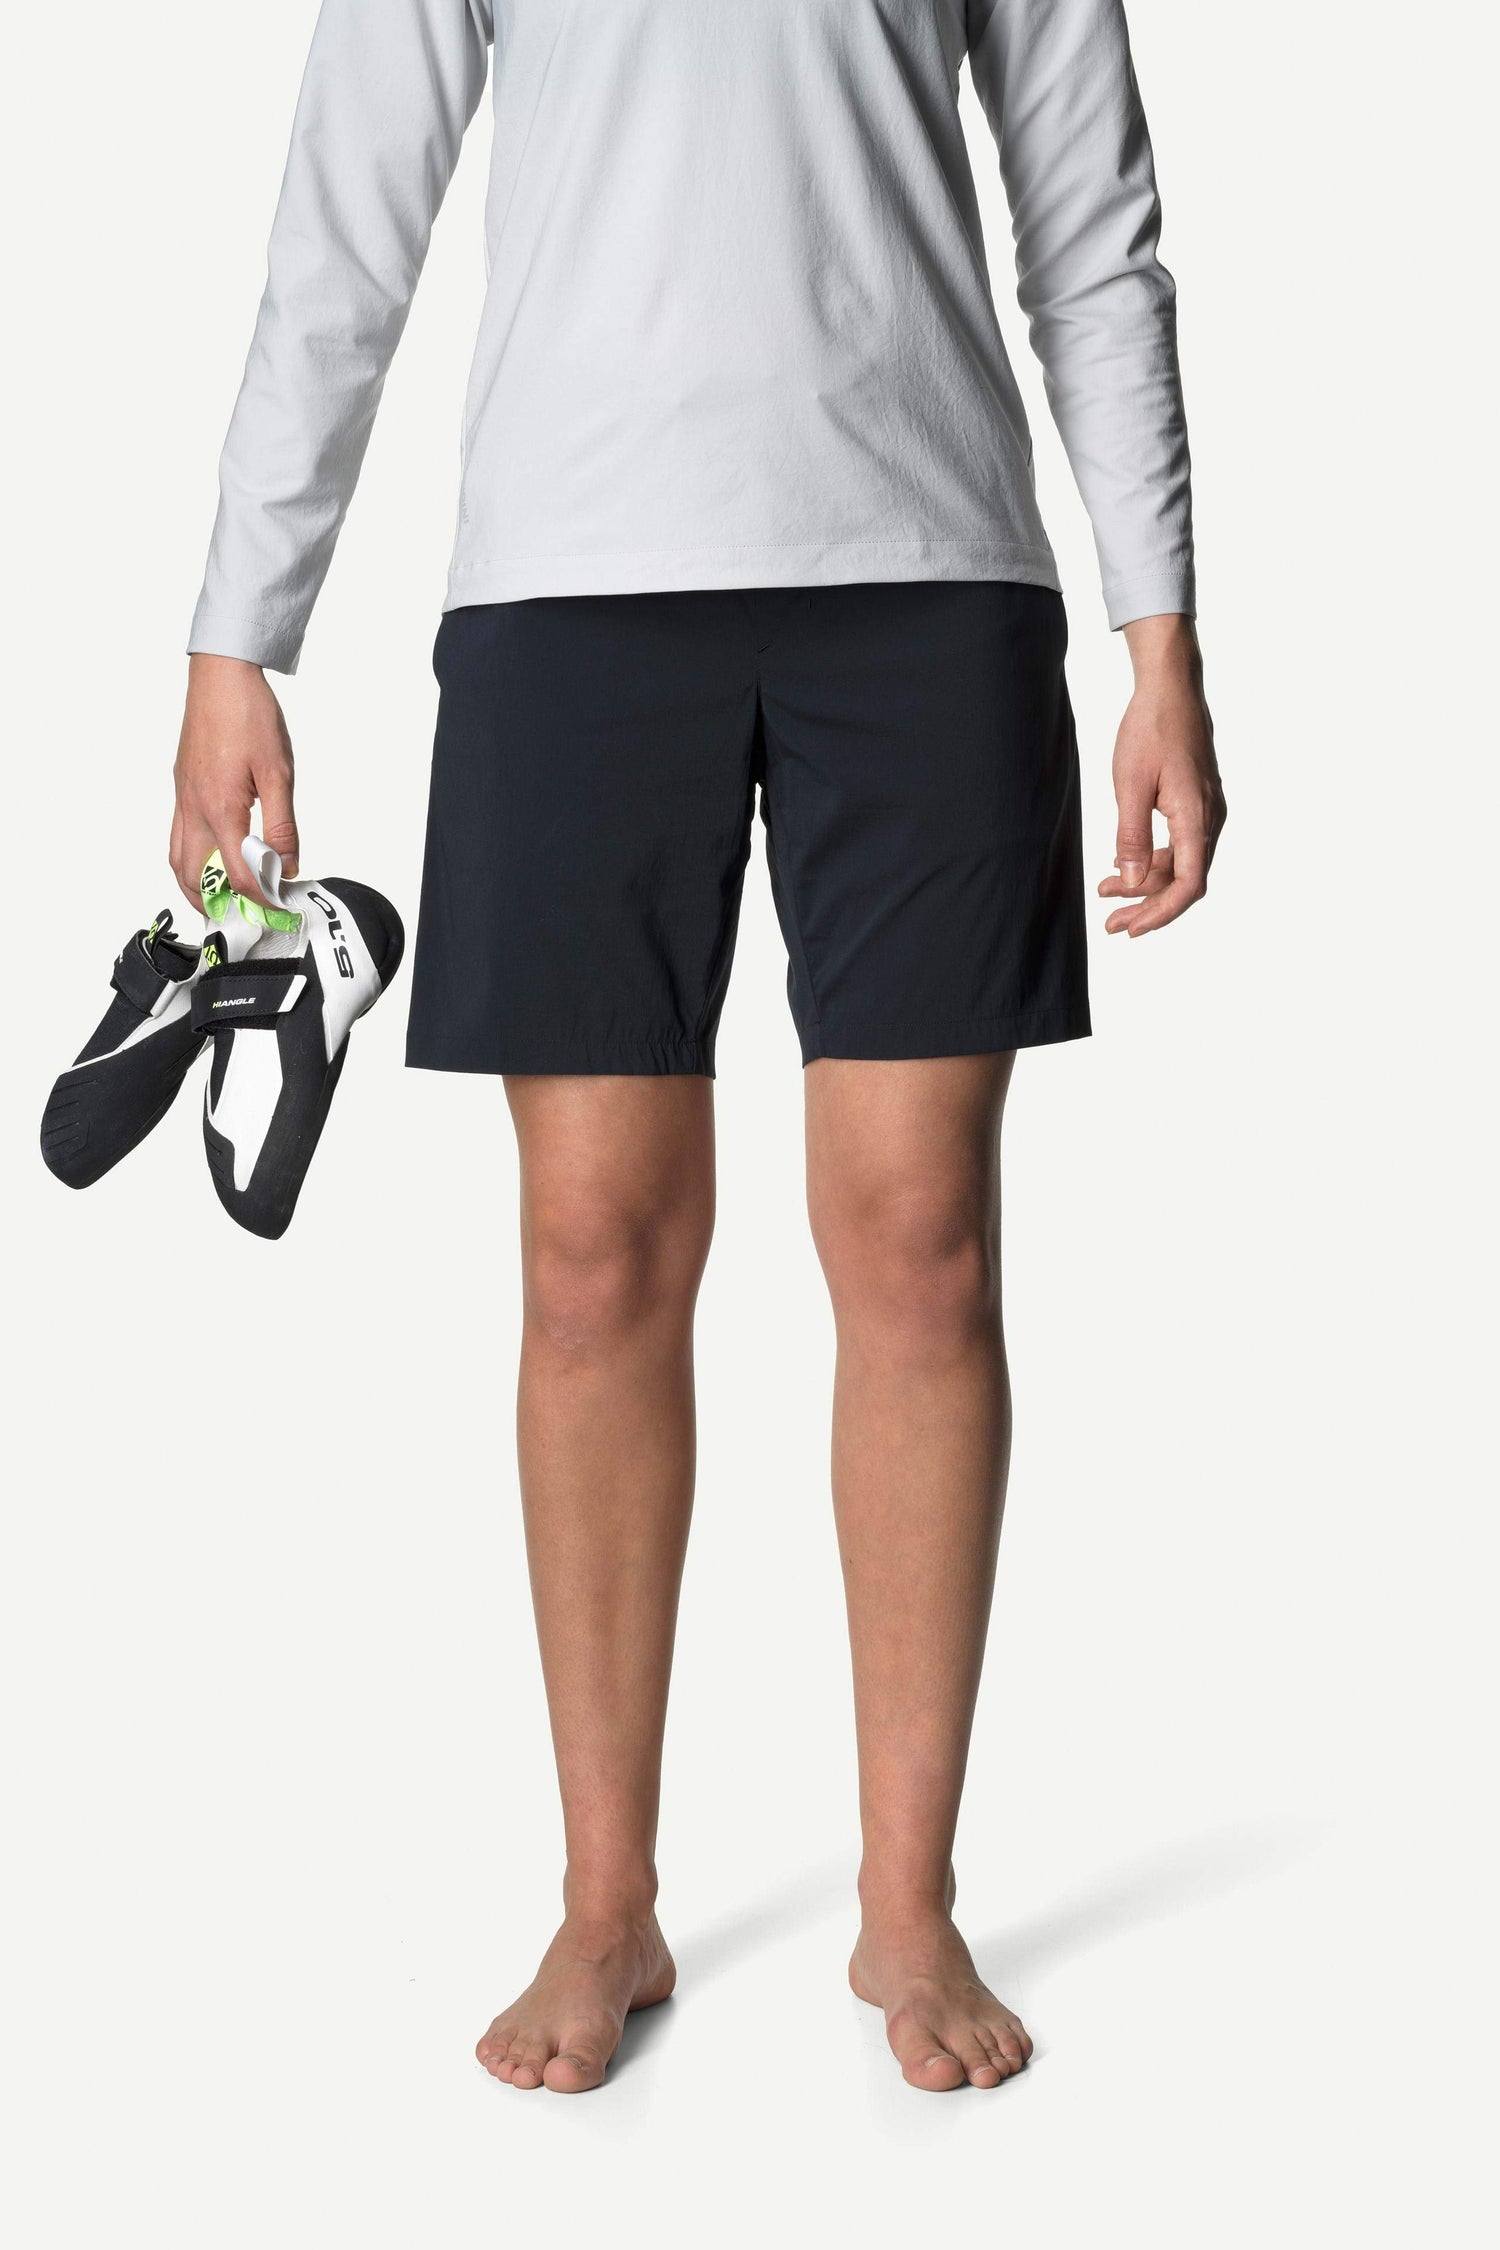 Houdini - W's Wadi Shorts - Recycled Polyamide - Weekendbee - sustainable sportswear